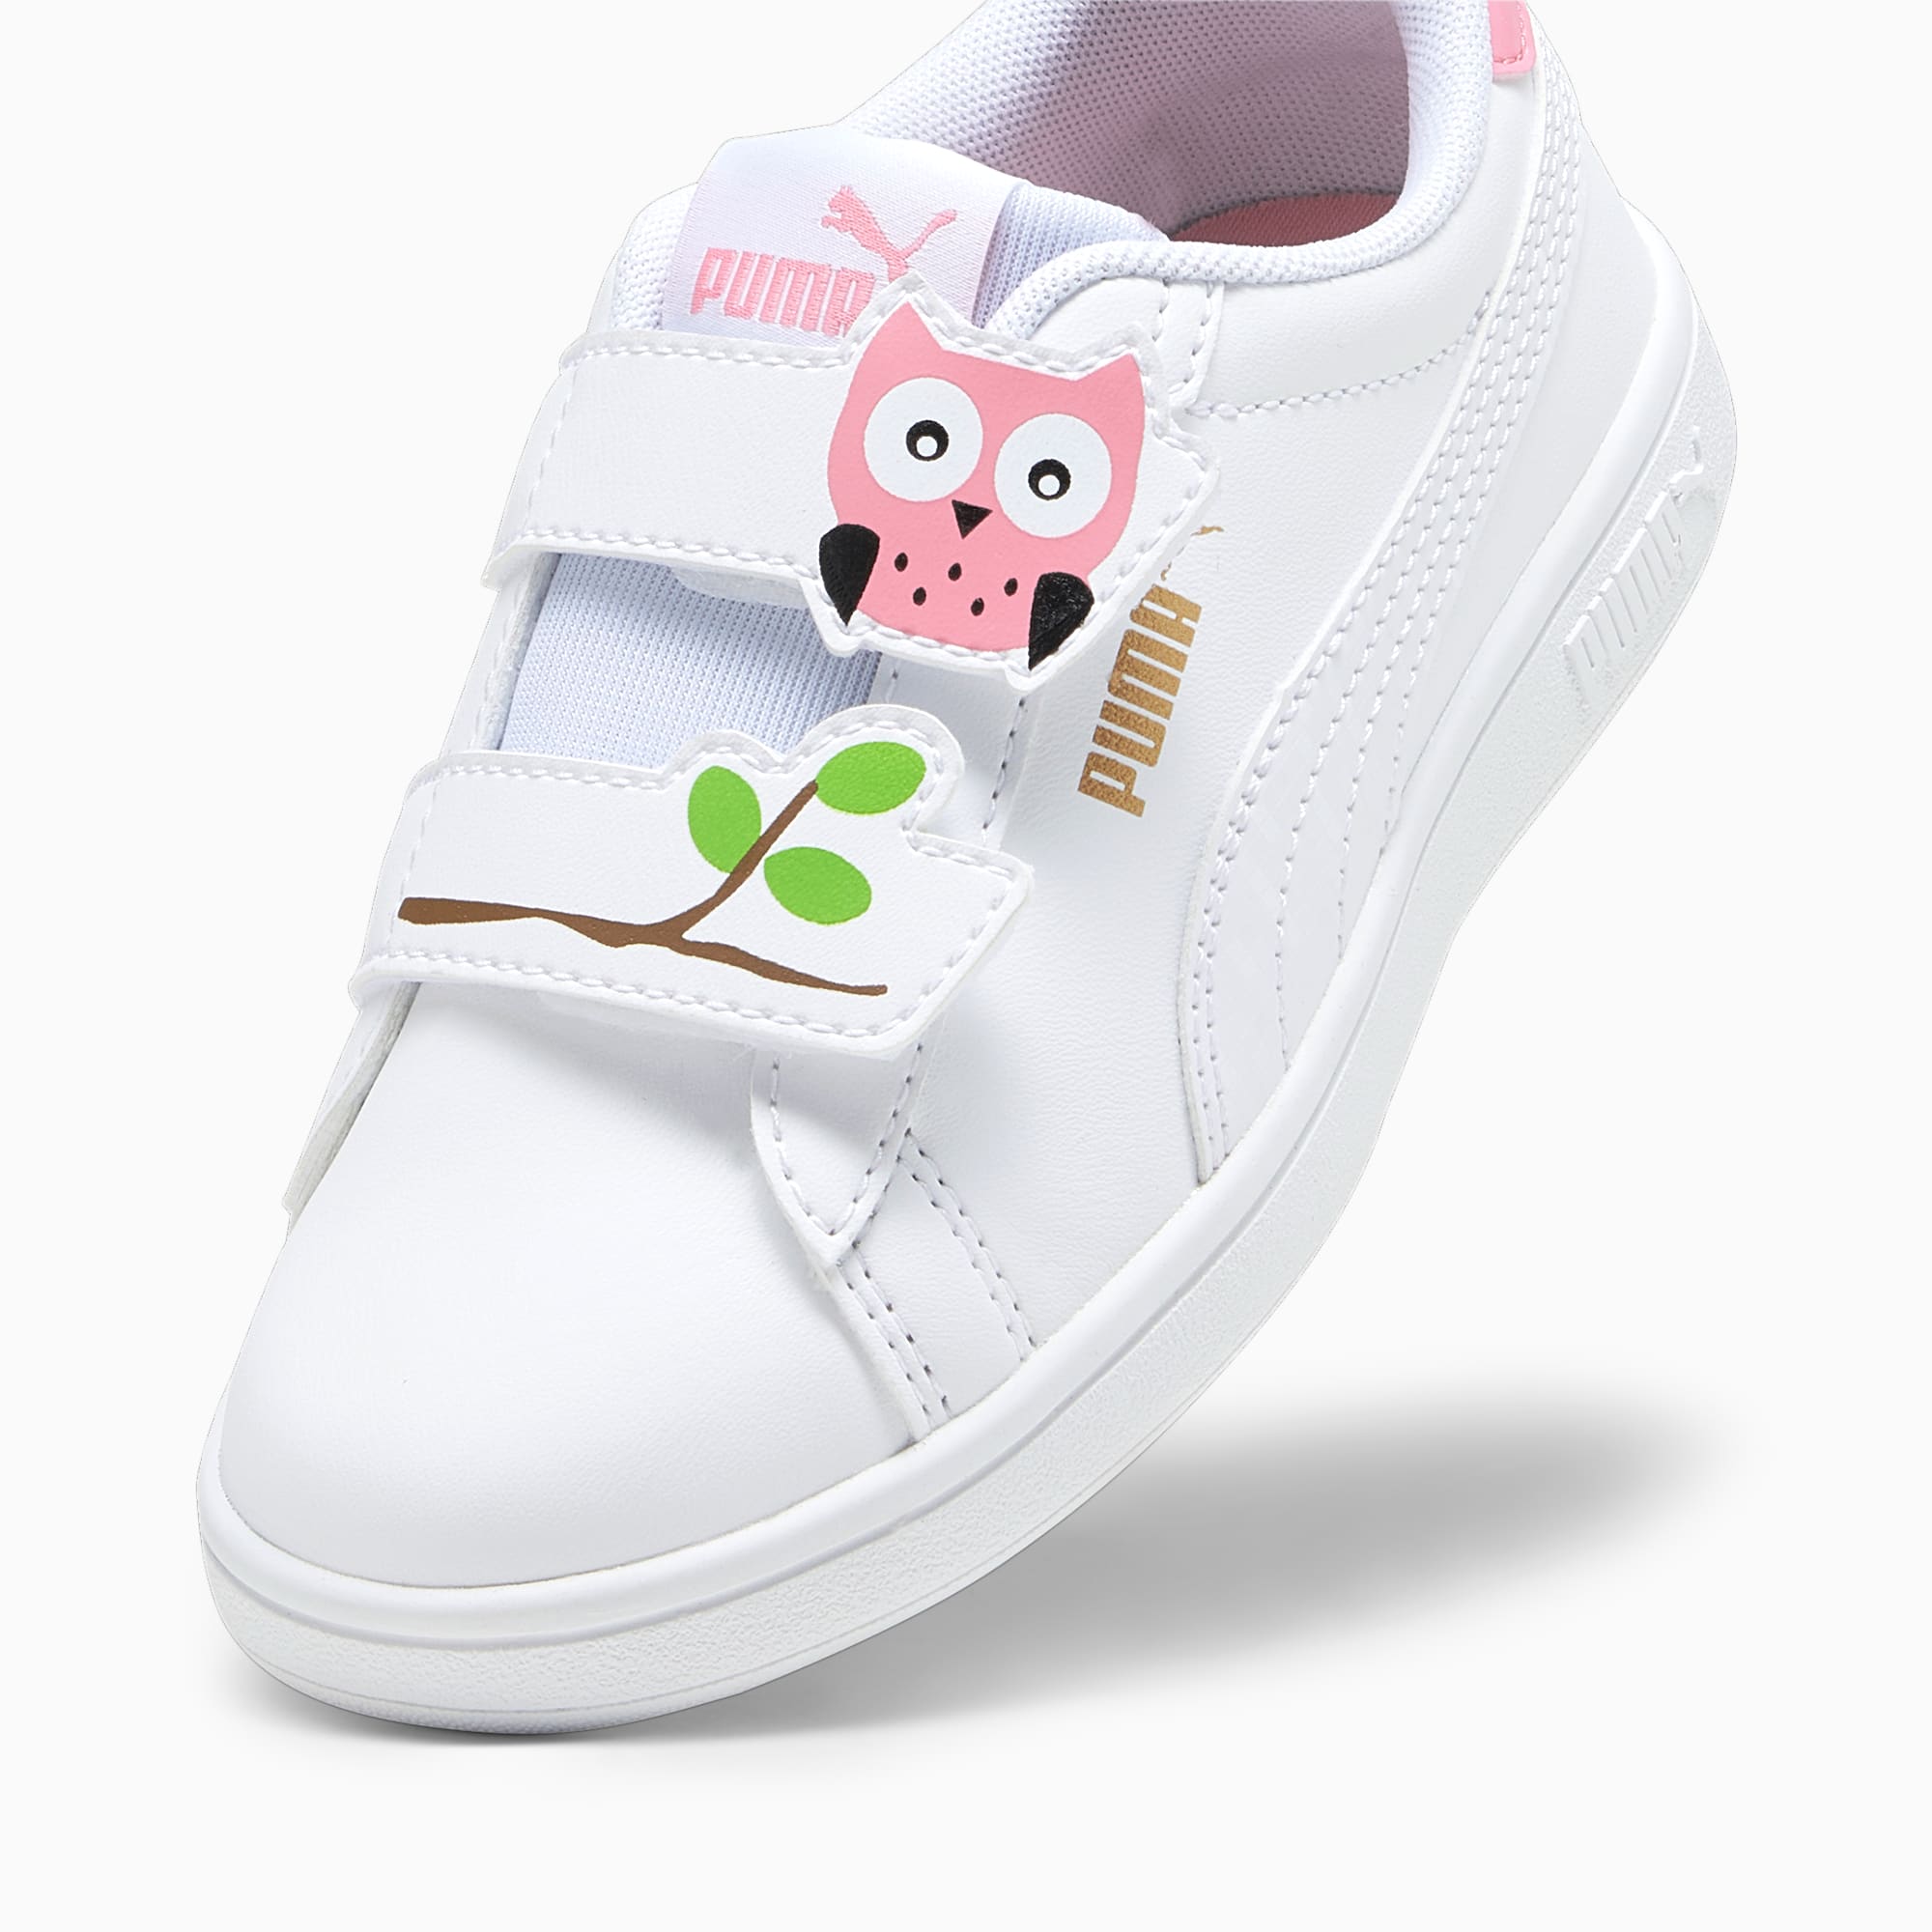 PUMA Smash 3.0 Owl Little Kids' Sneakers | PUMA